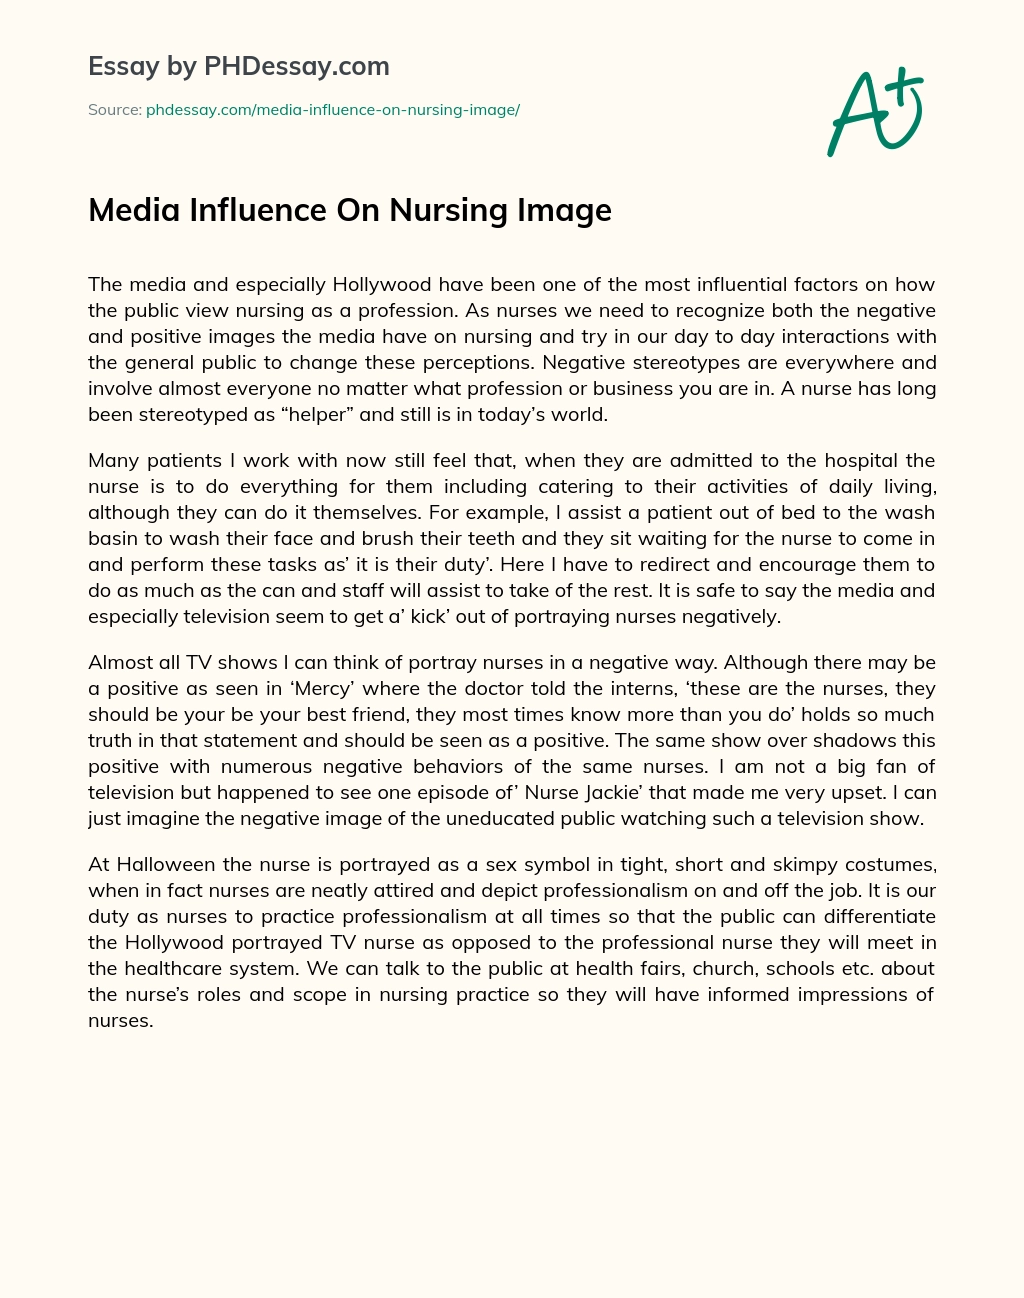 Media Influence On Nursing Image essay